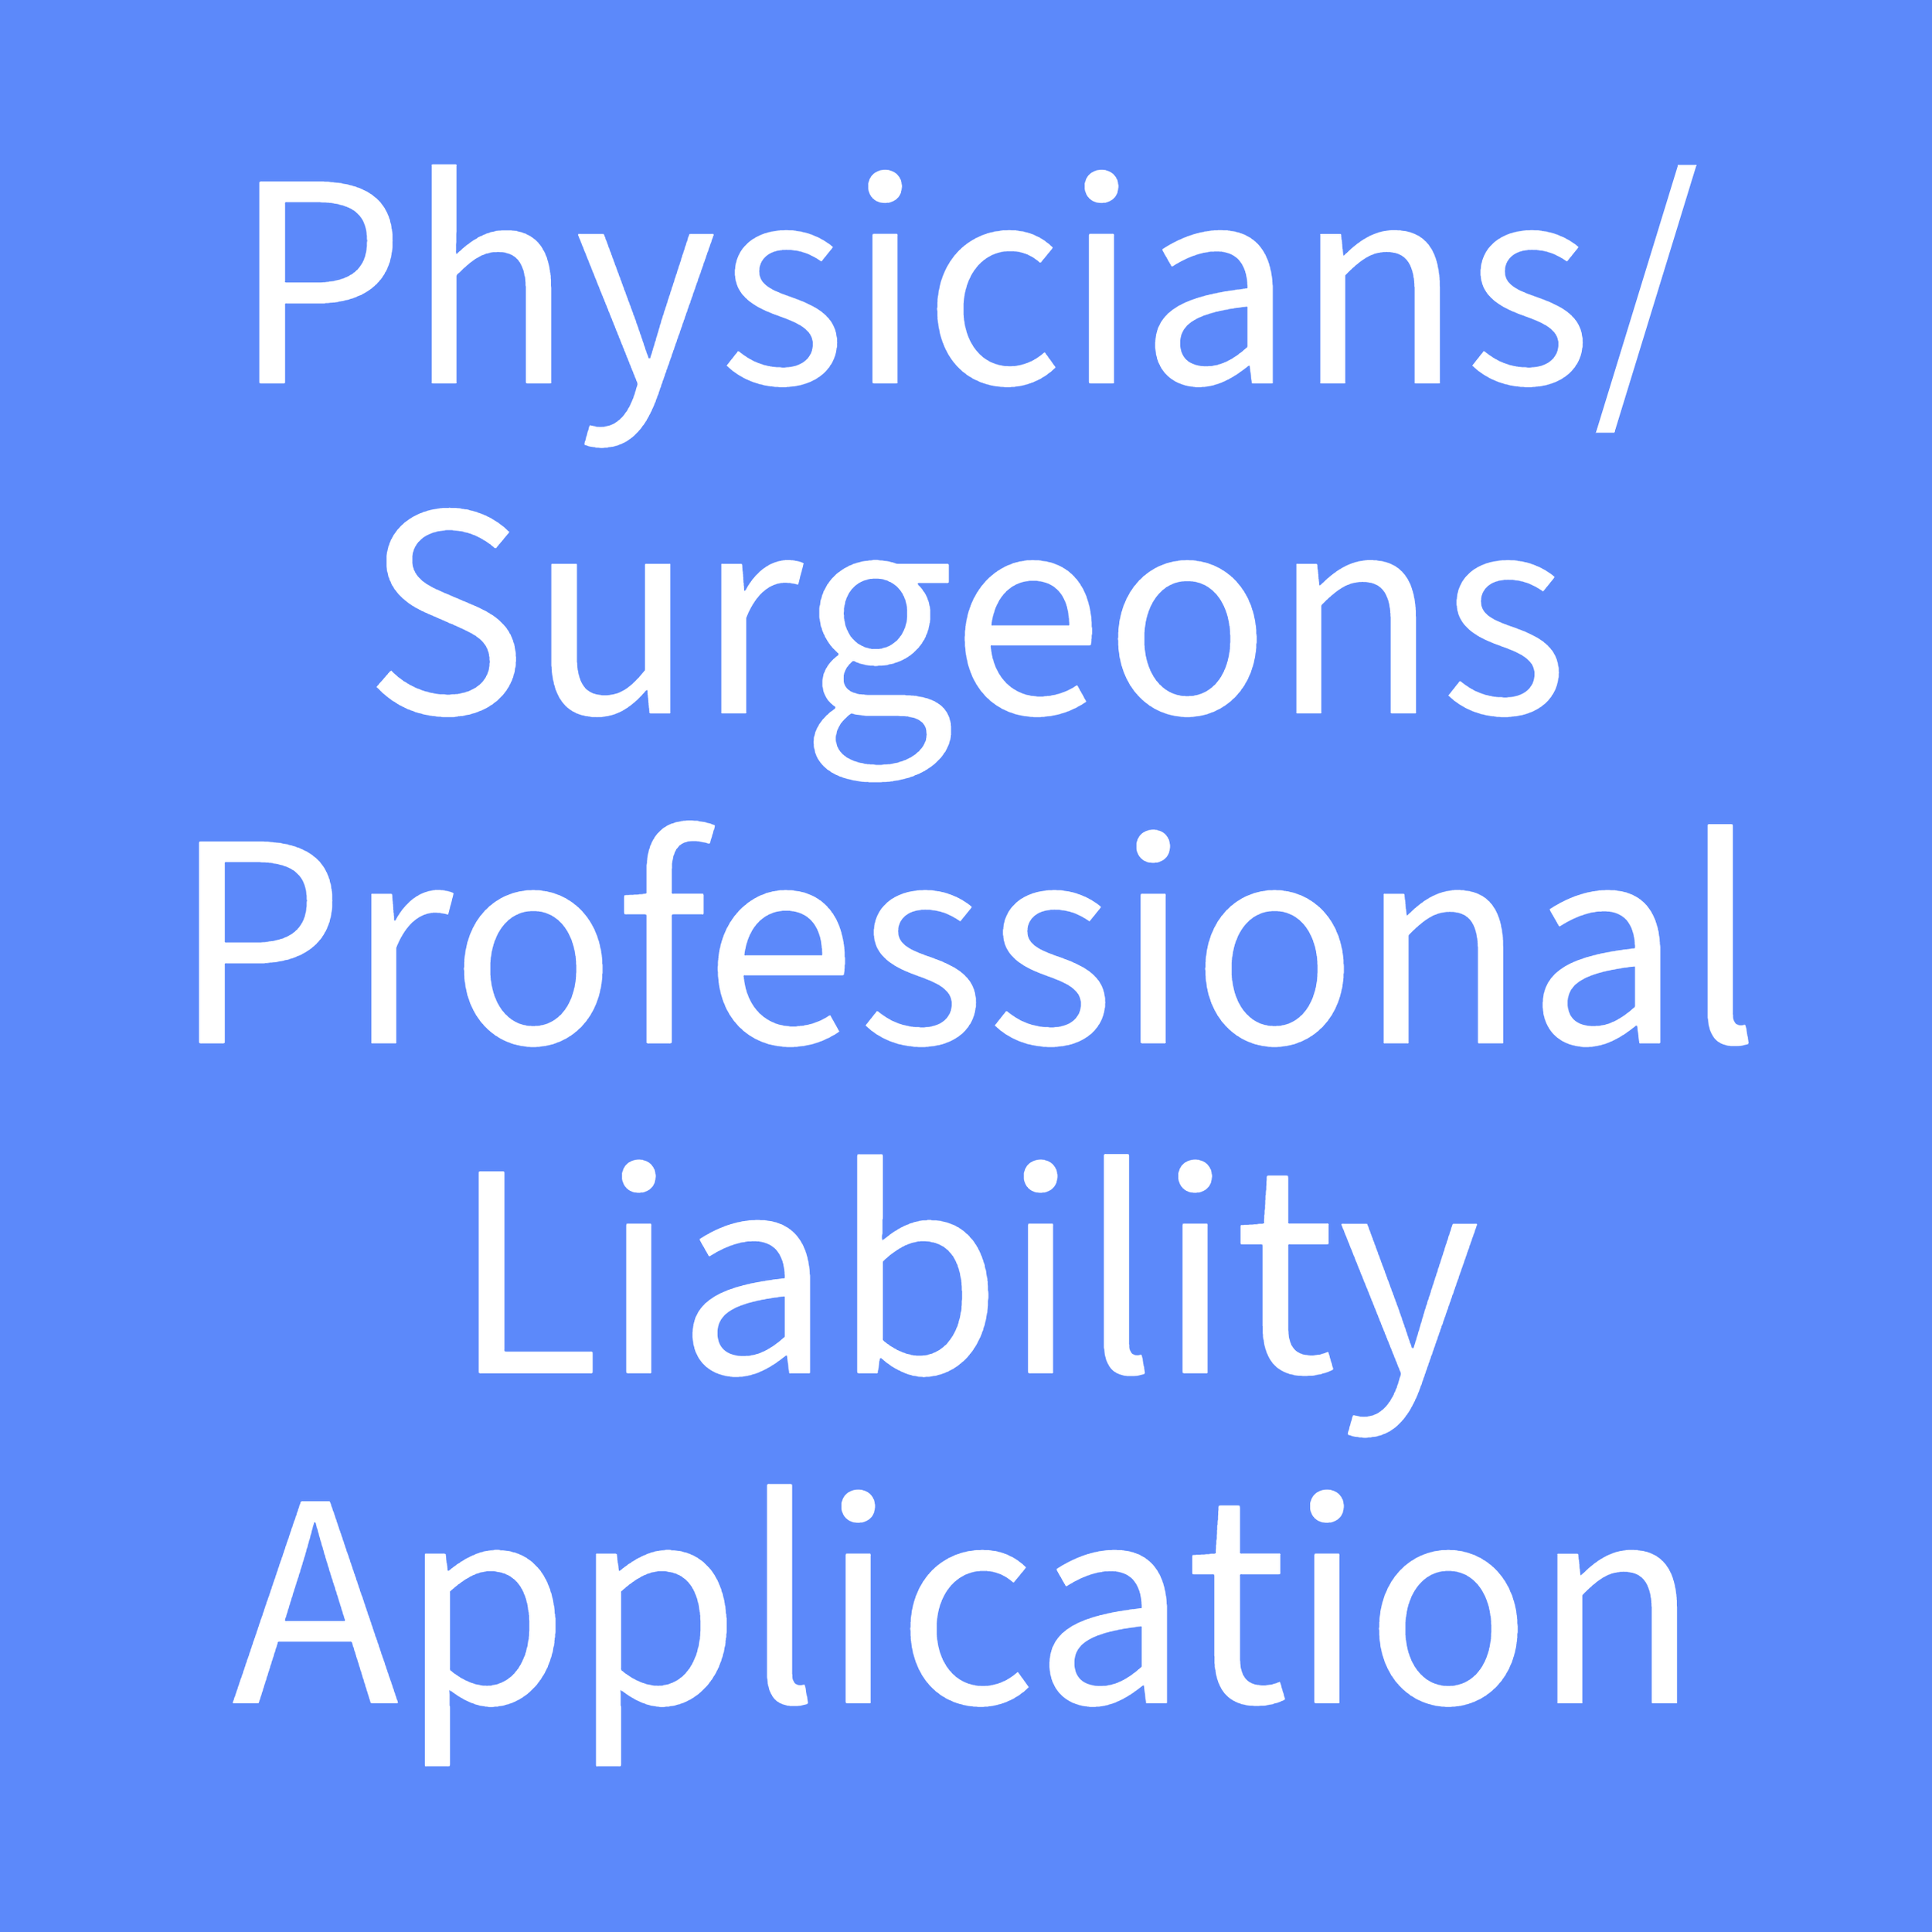 Surgeons Professional Liability App.png